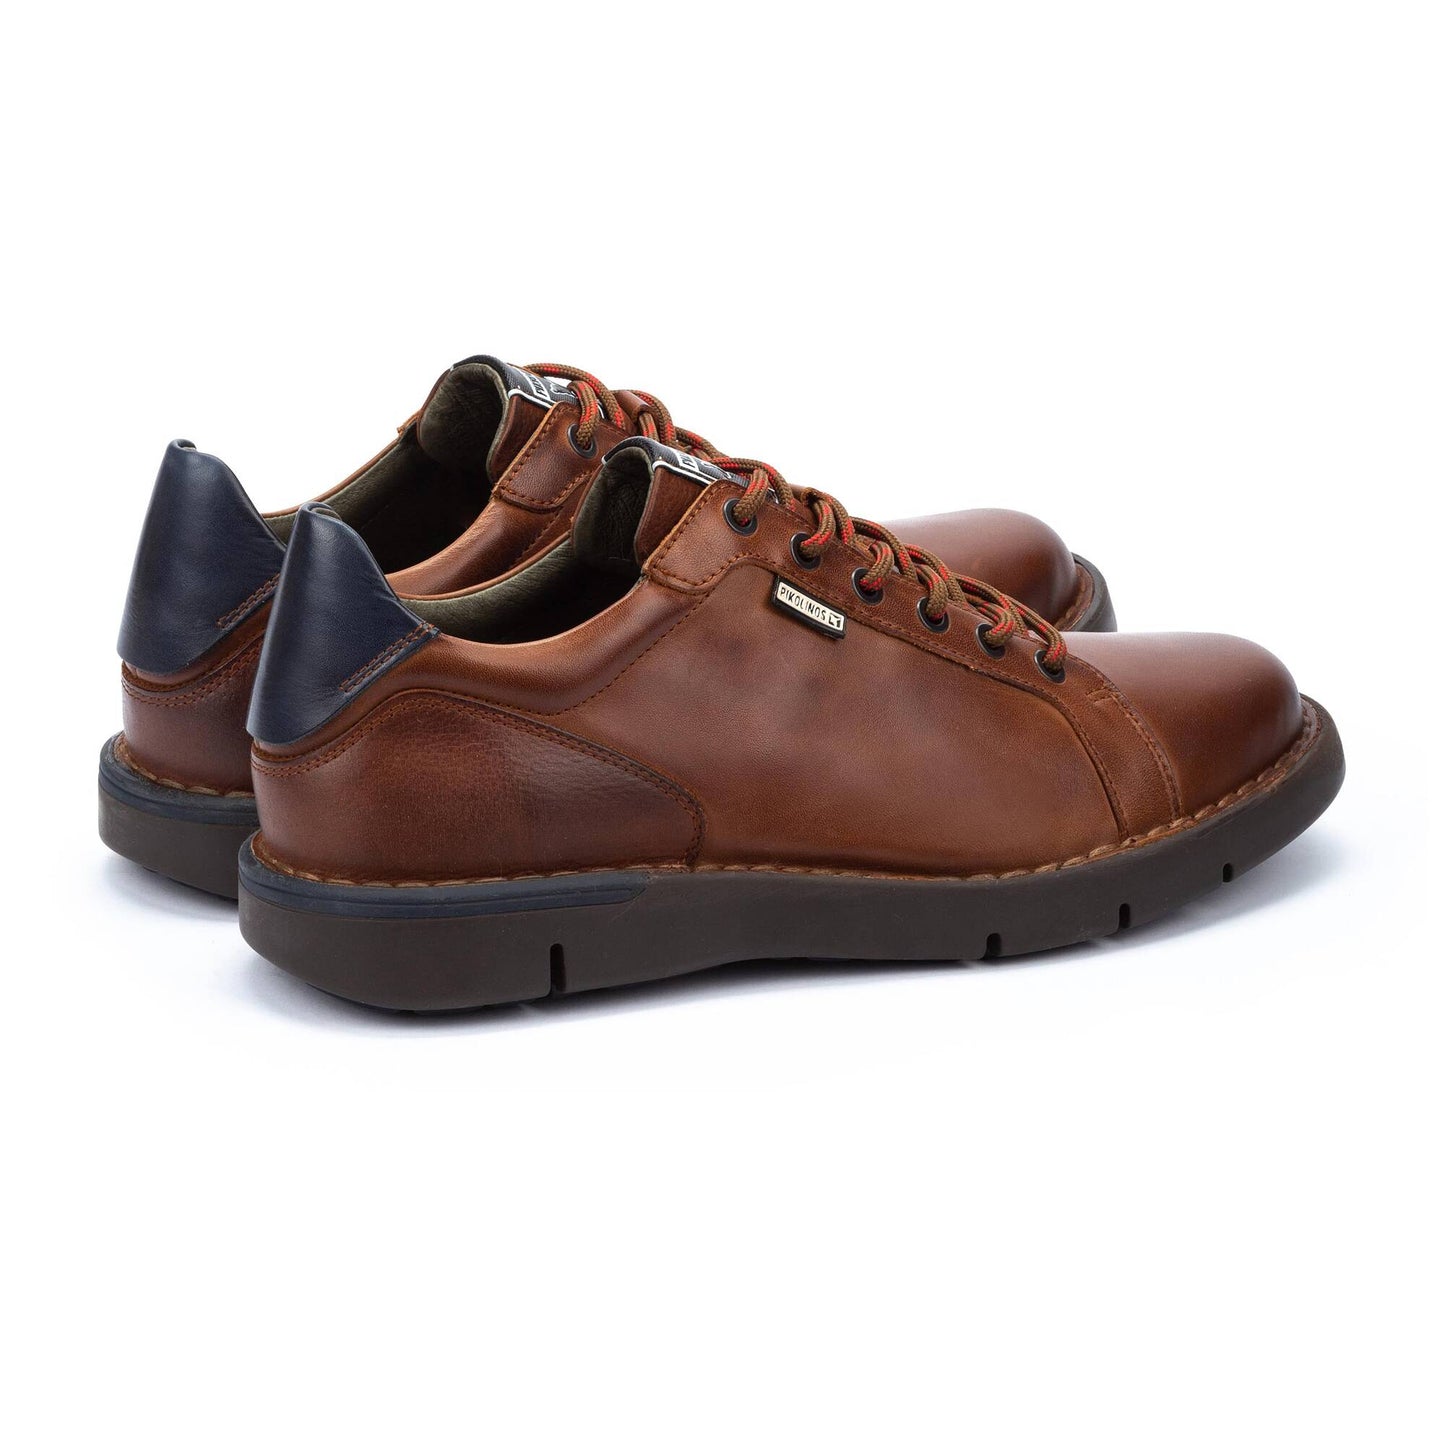 Pikolinos Men's Tolosa M7N-4150C1 Leather Casual Shoes Cuero Brown